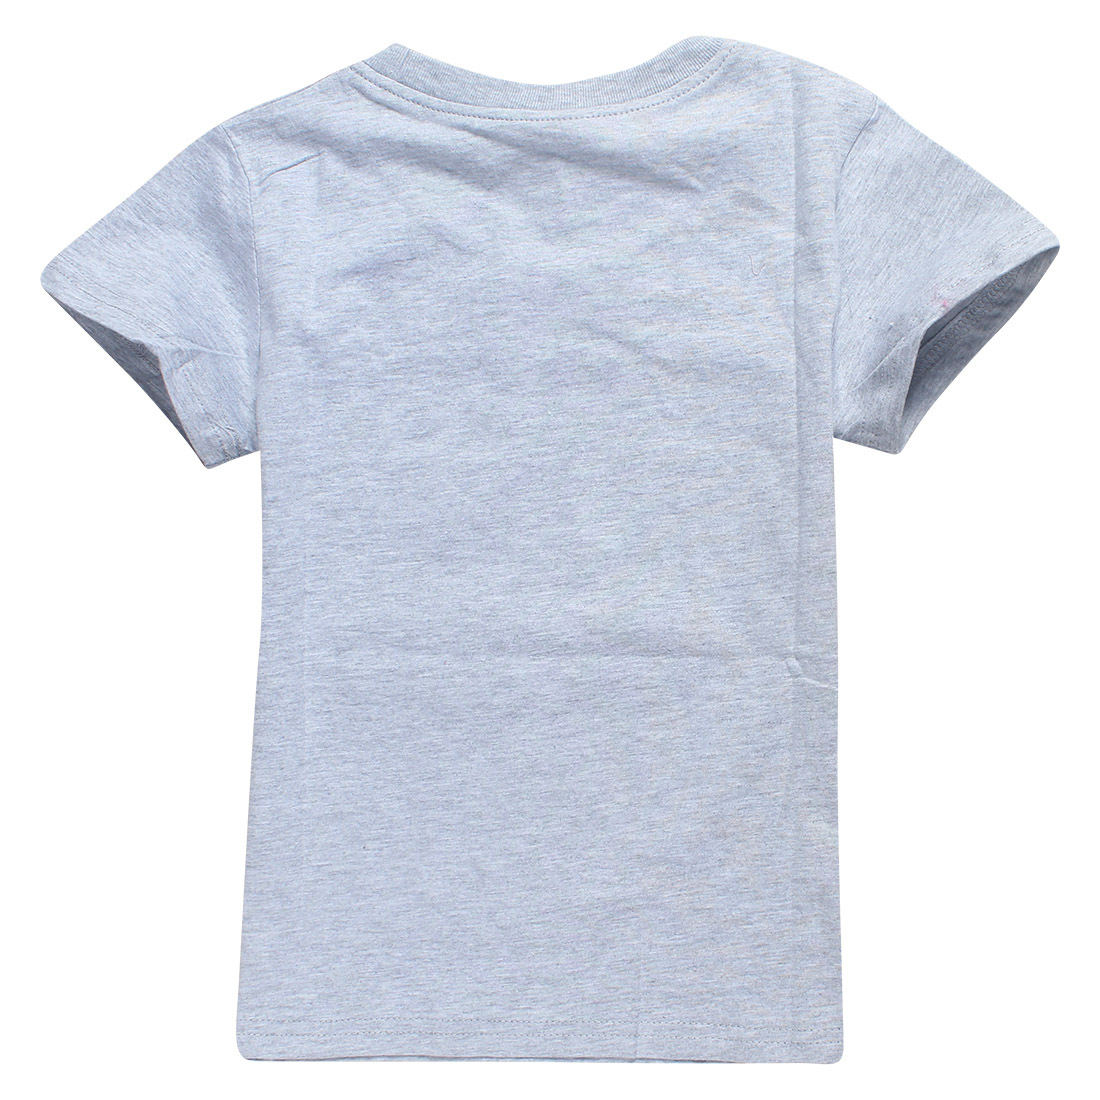 Roblox T Shirts For Kids Eyegemix Com - roblox morty shirt